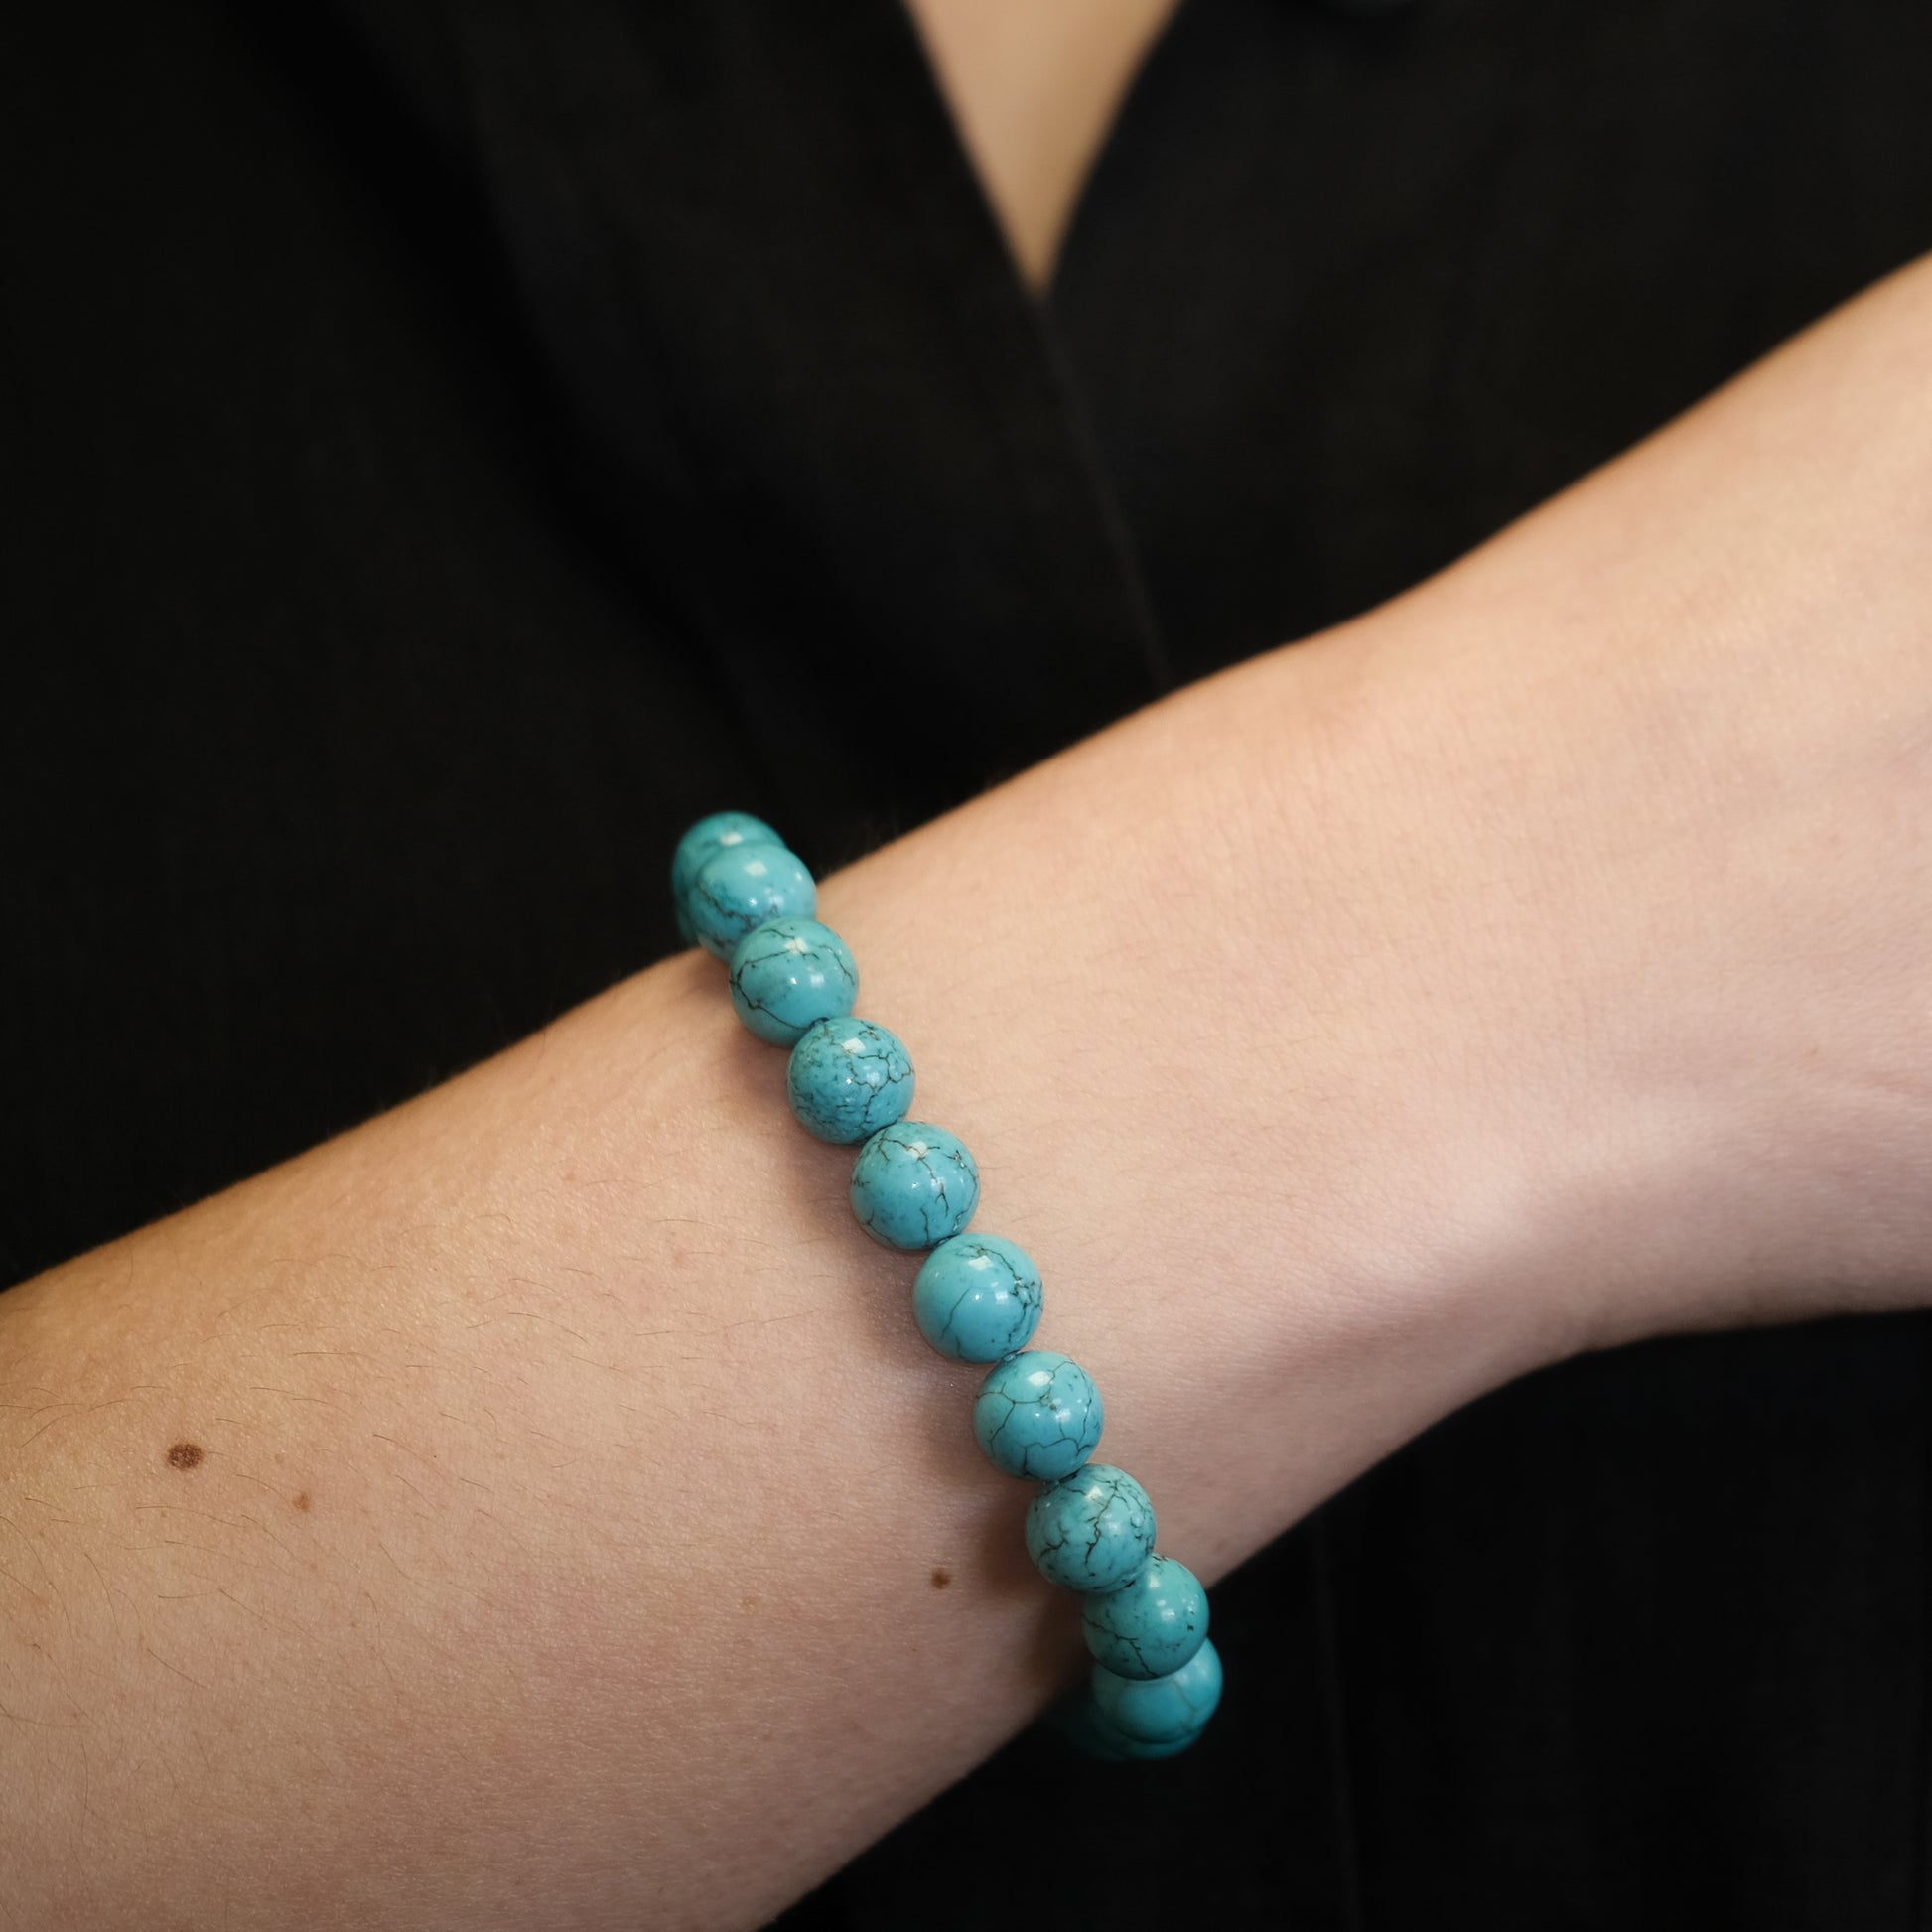 8mm turquoise gemstone bracelet pictured on female wrist